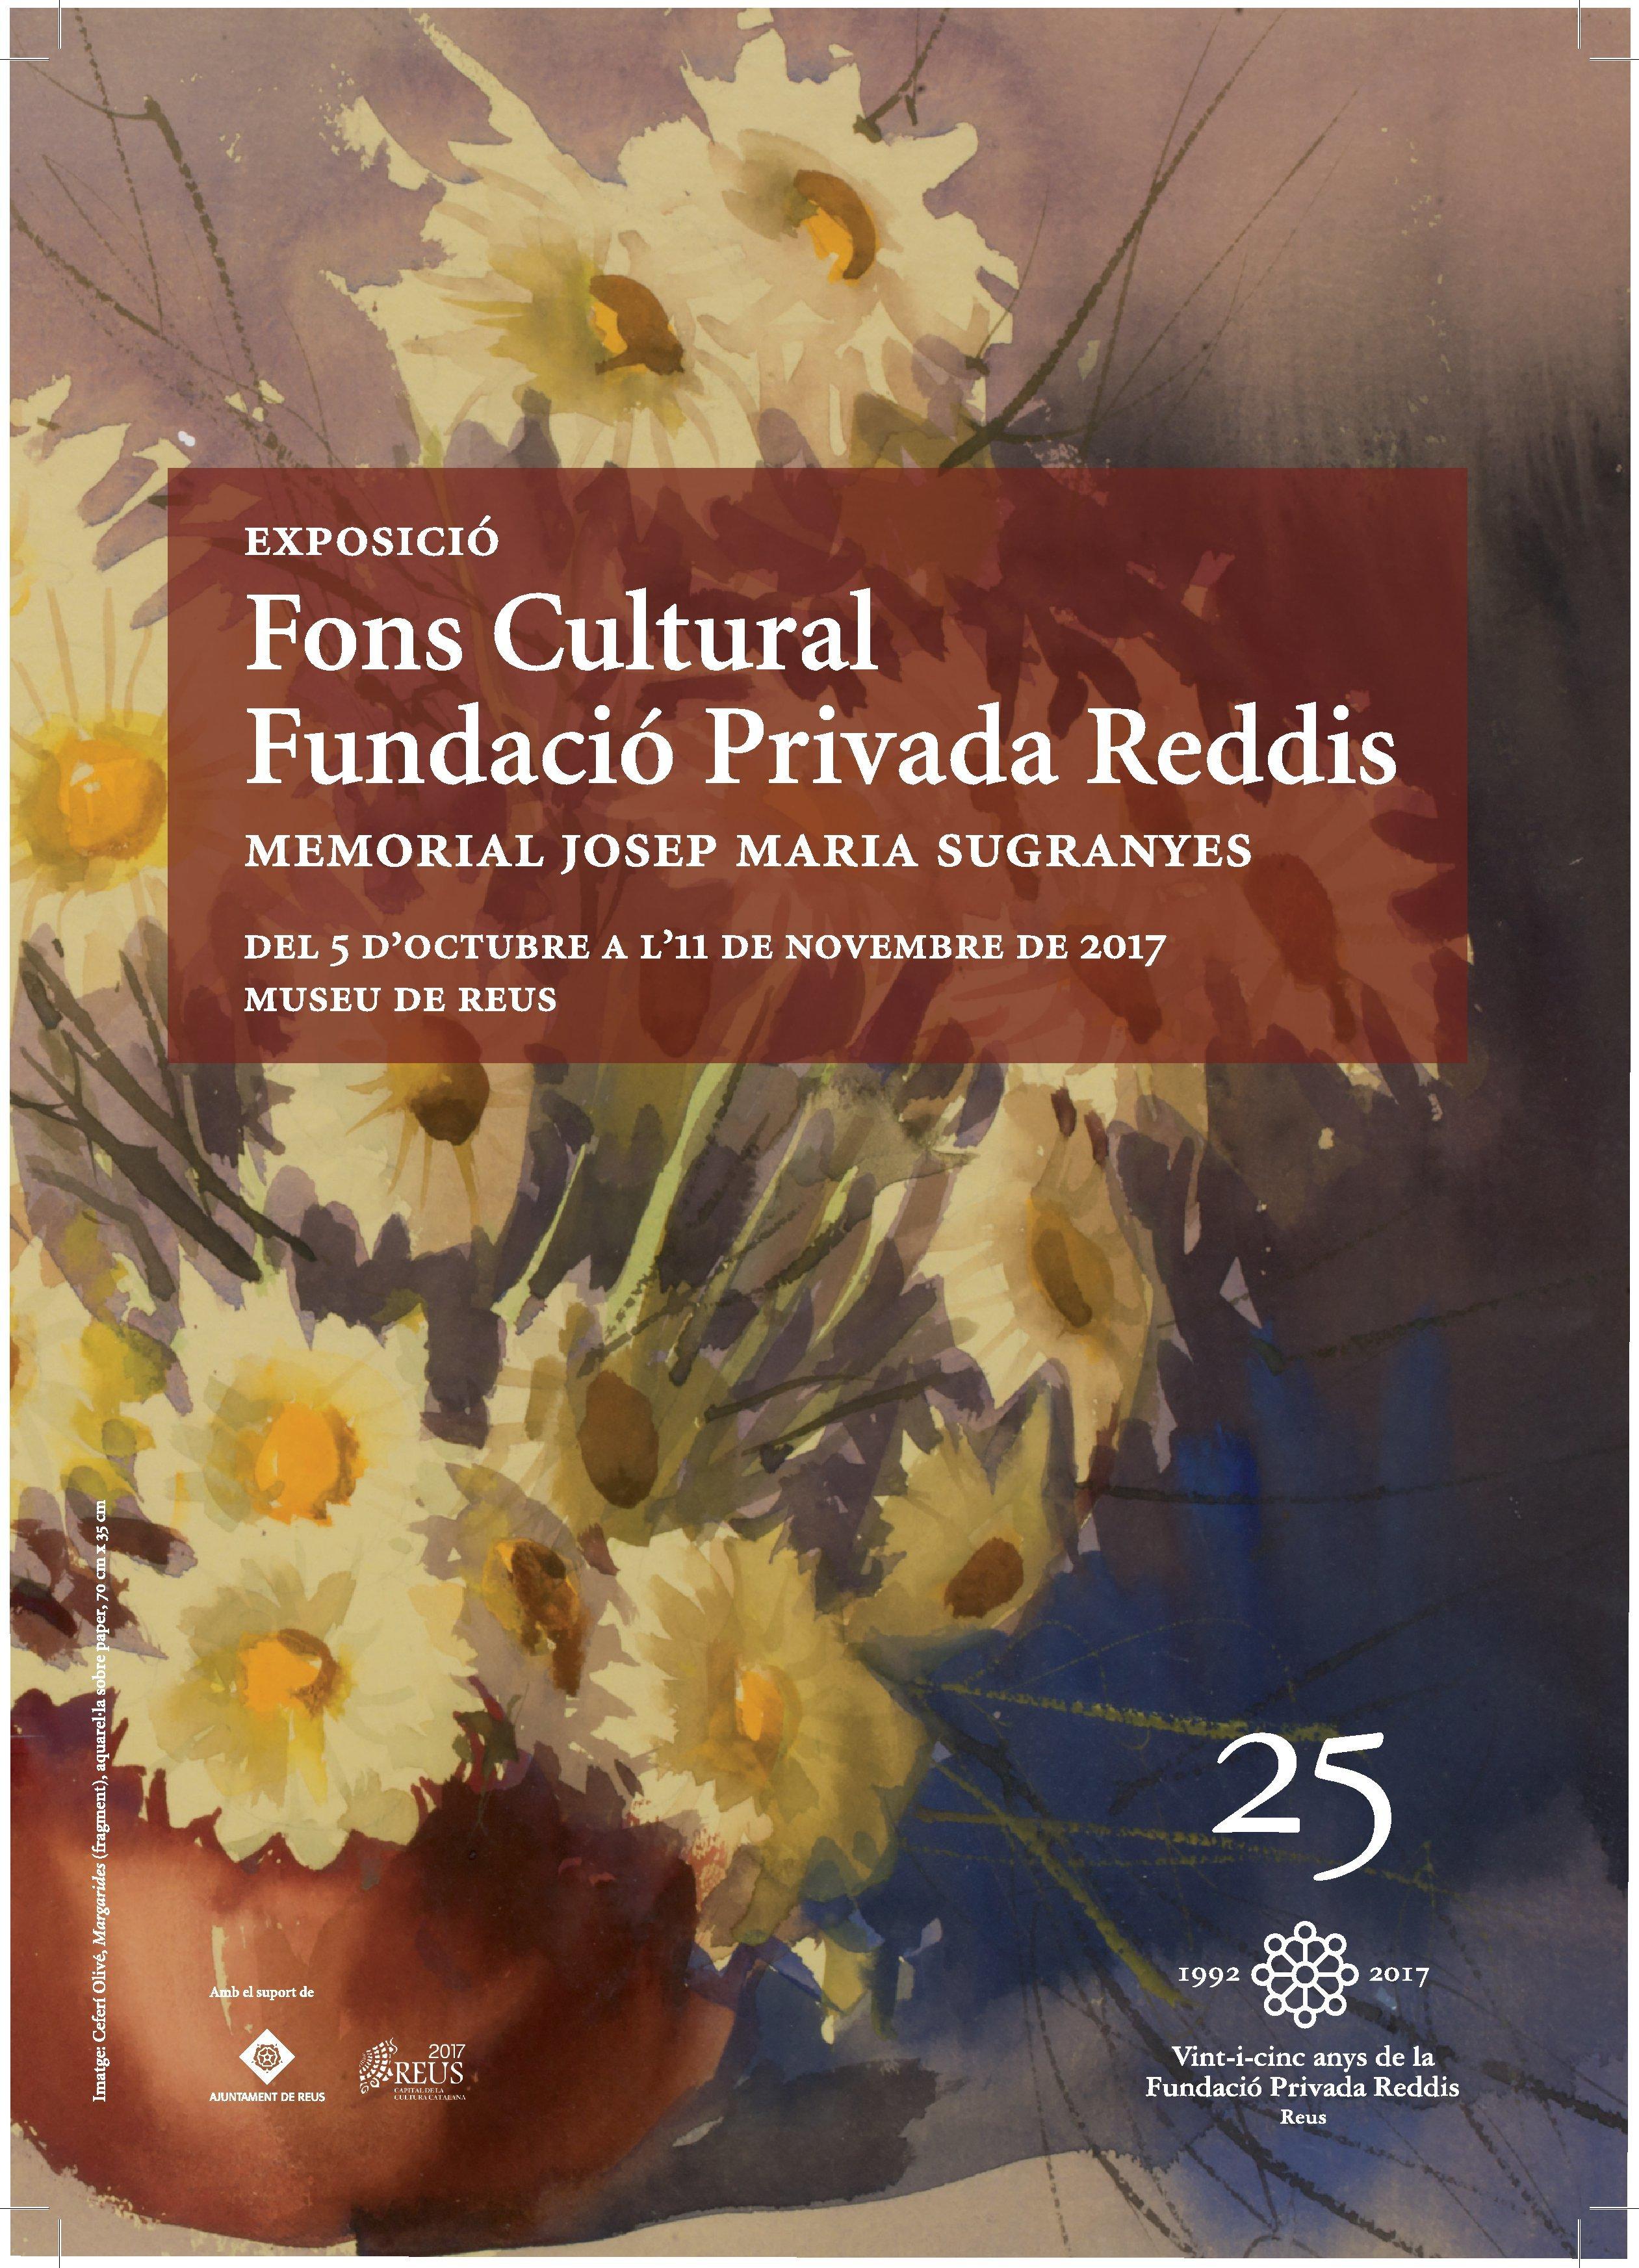 Fons cultural Fundació Privada Reddis. Memorial Josep Maria Sugranyes